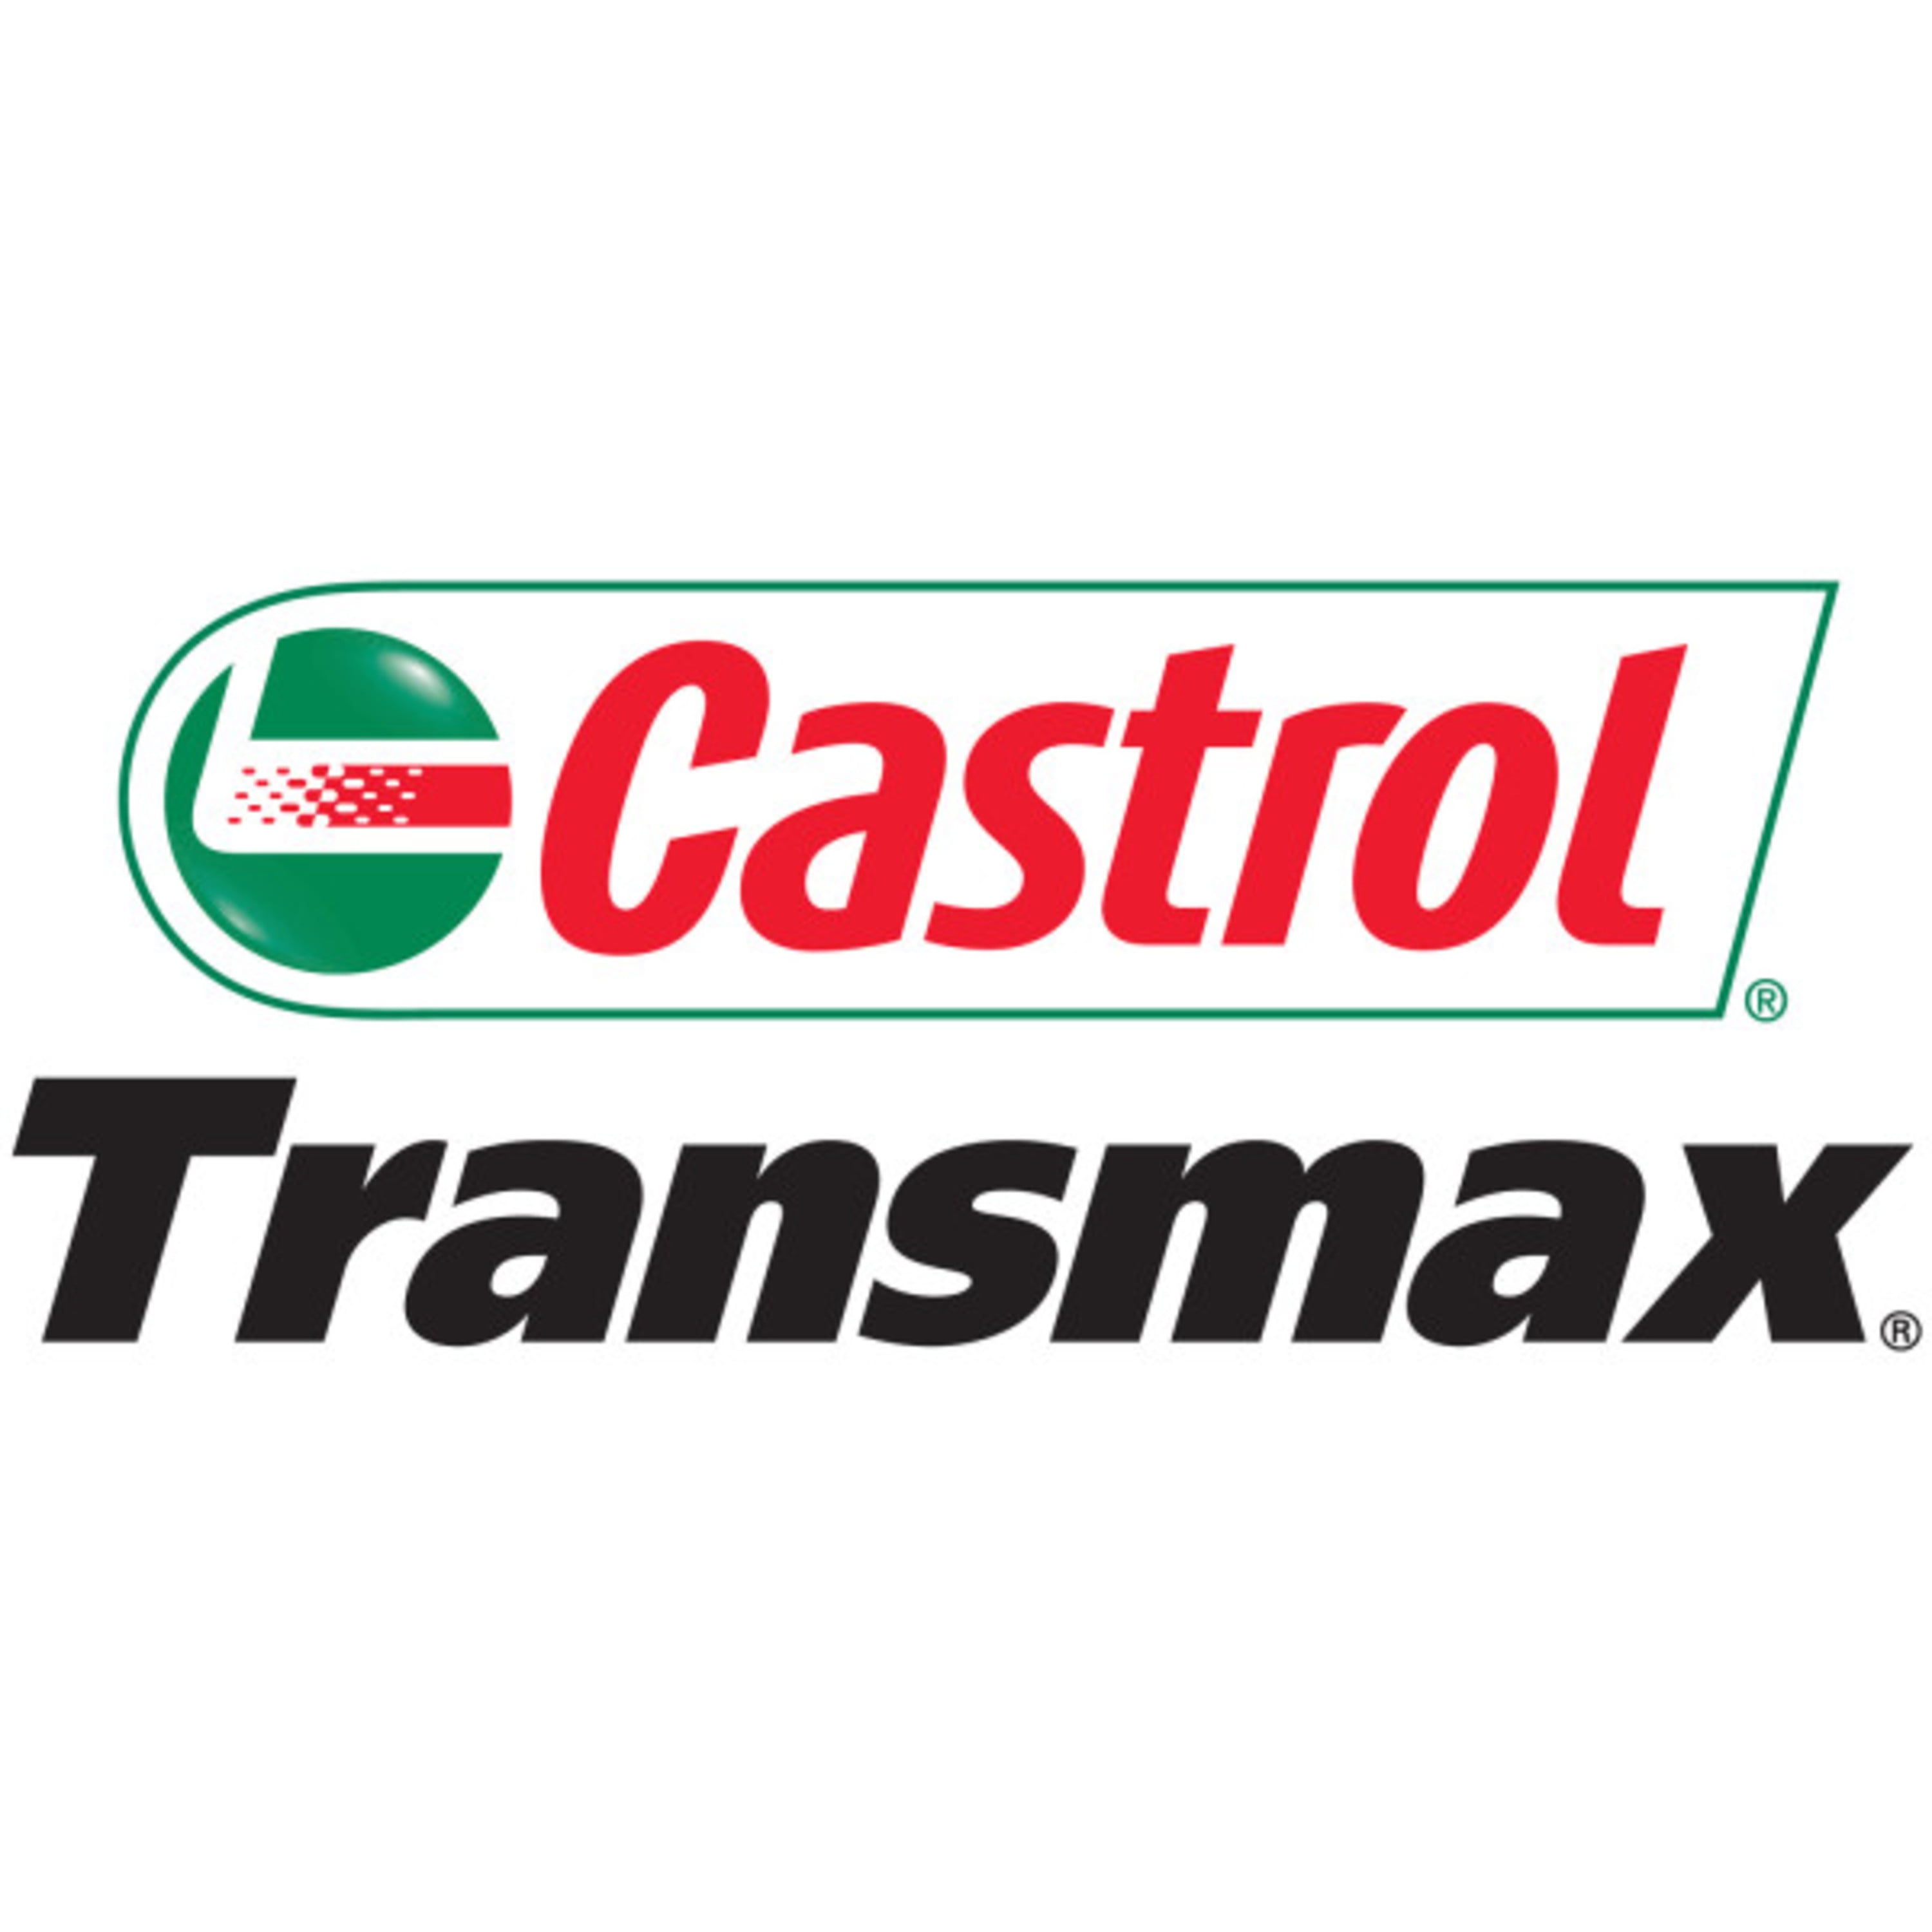 Castrol Transmax Dexron VI/Mercon LV Automatic Transmission Fluid 1 Gallon